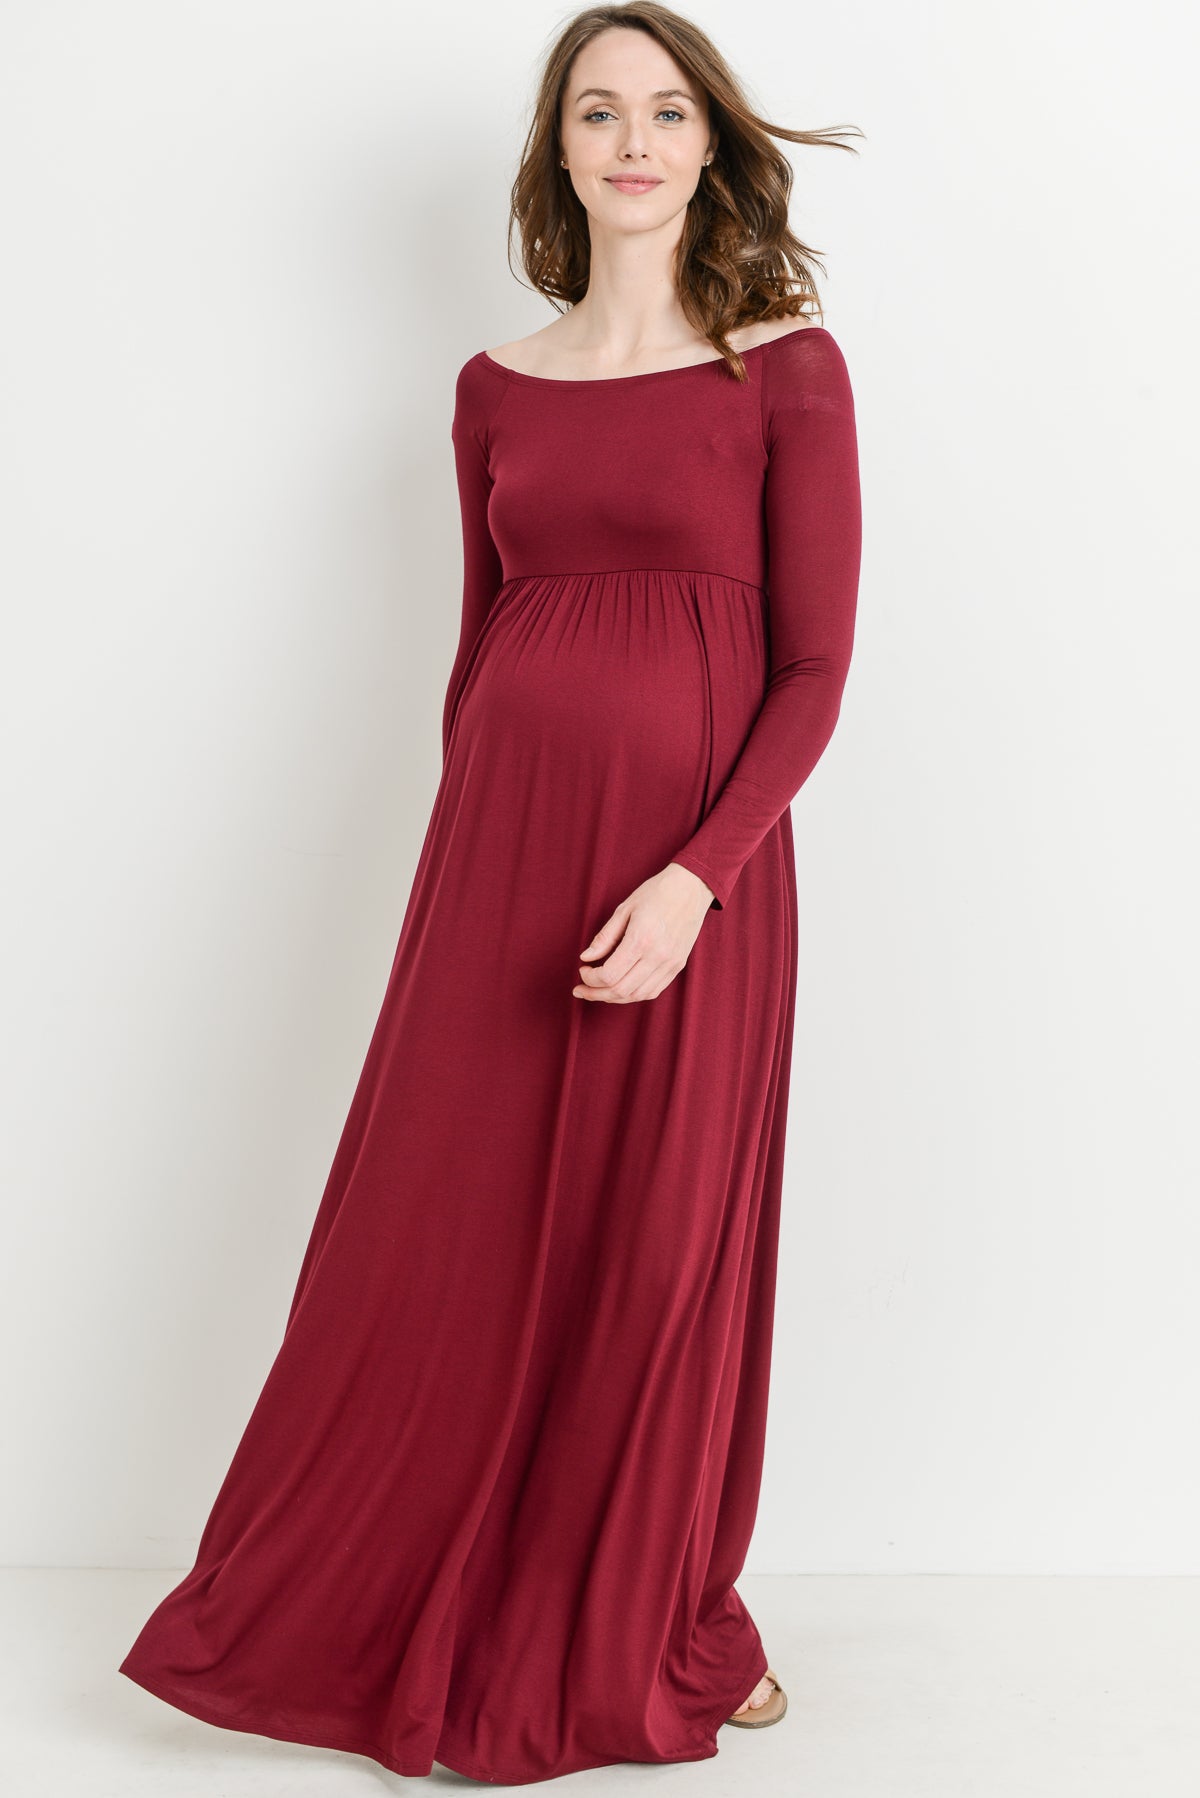 24seven Comfort Apparel V-Neck Long Sleeve Maternity Maxi Dress